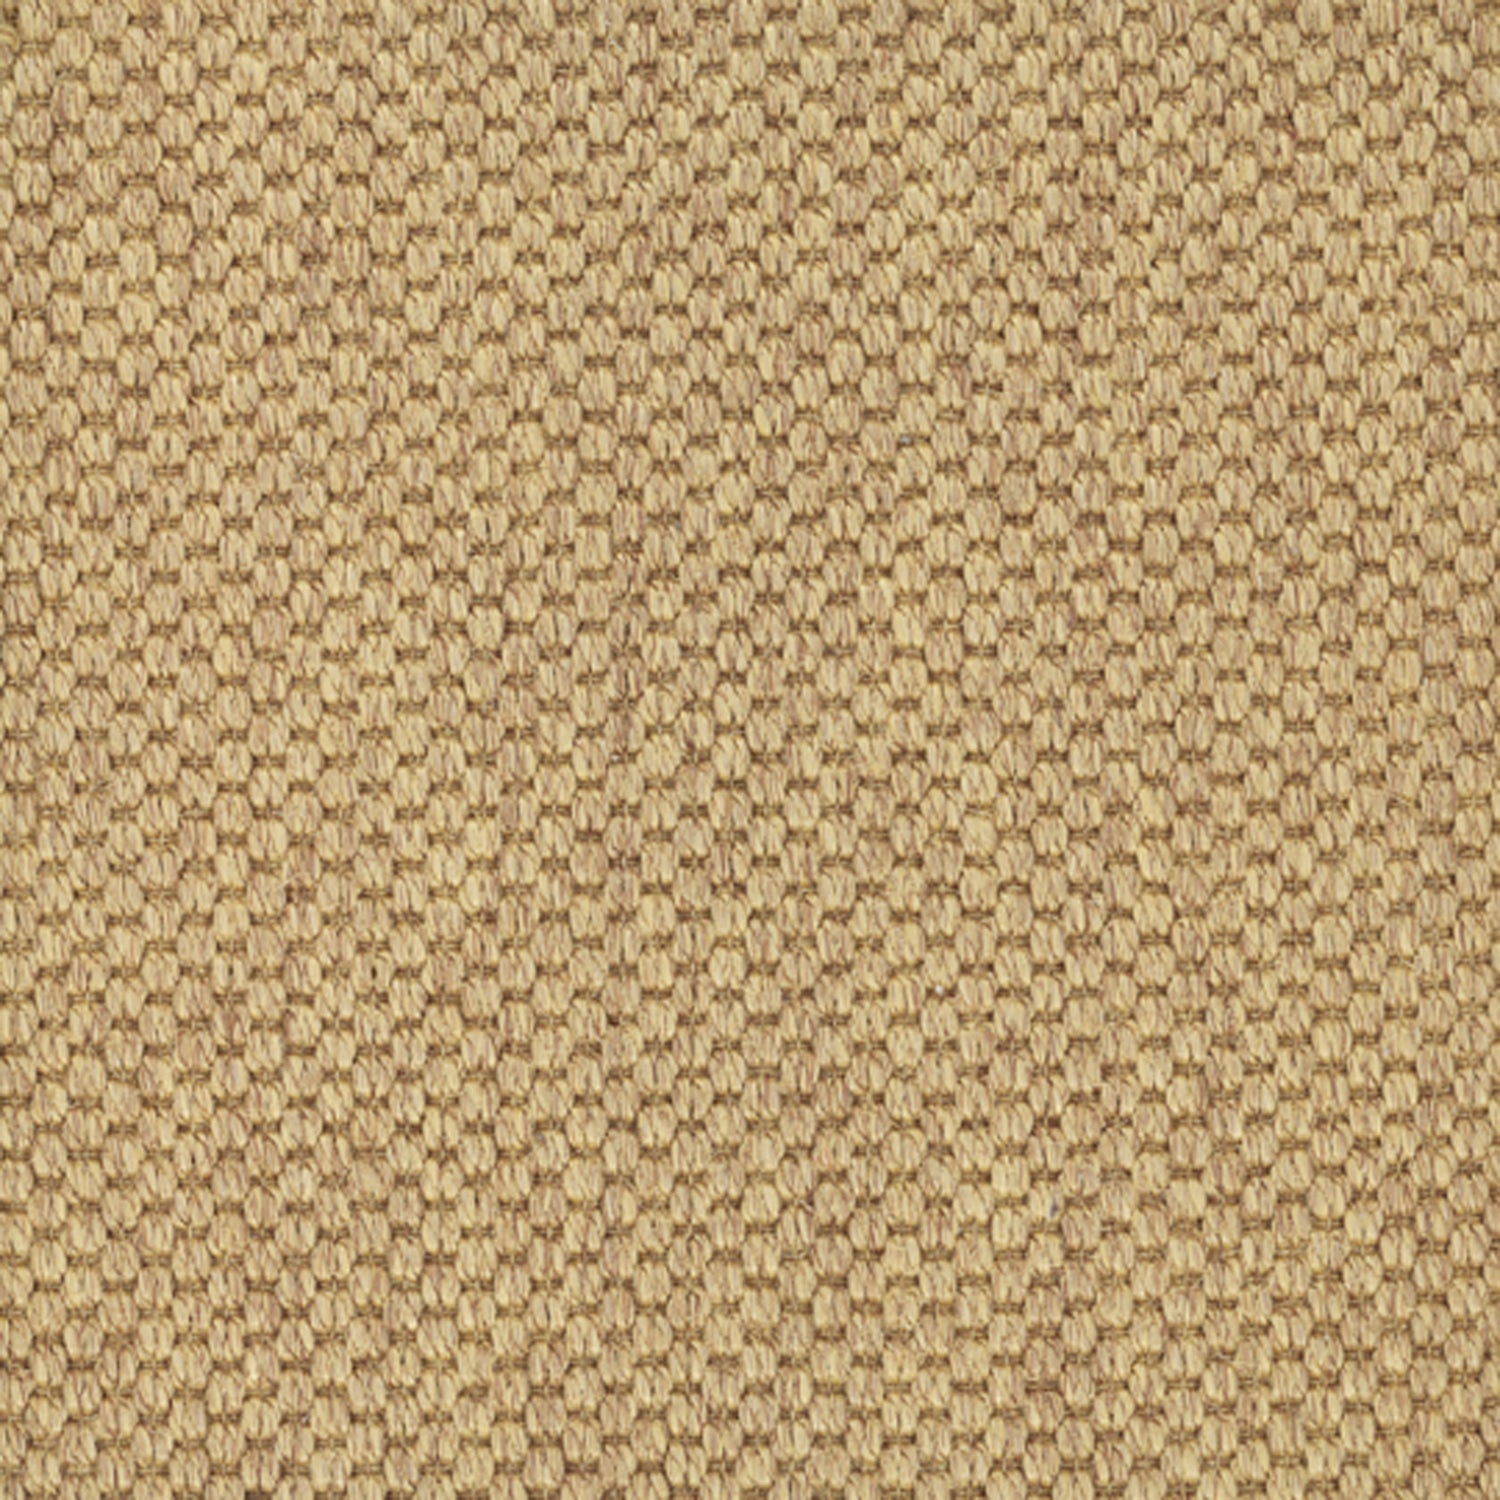 Sisal broadloom carpet swatch in a chunky grid weave in tan and bronze.